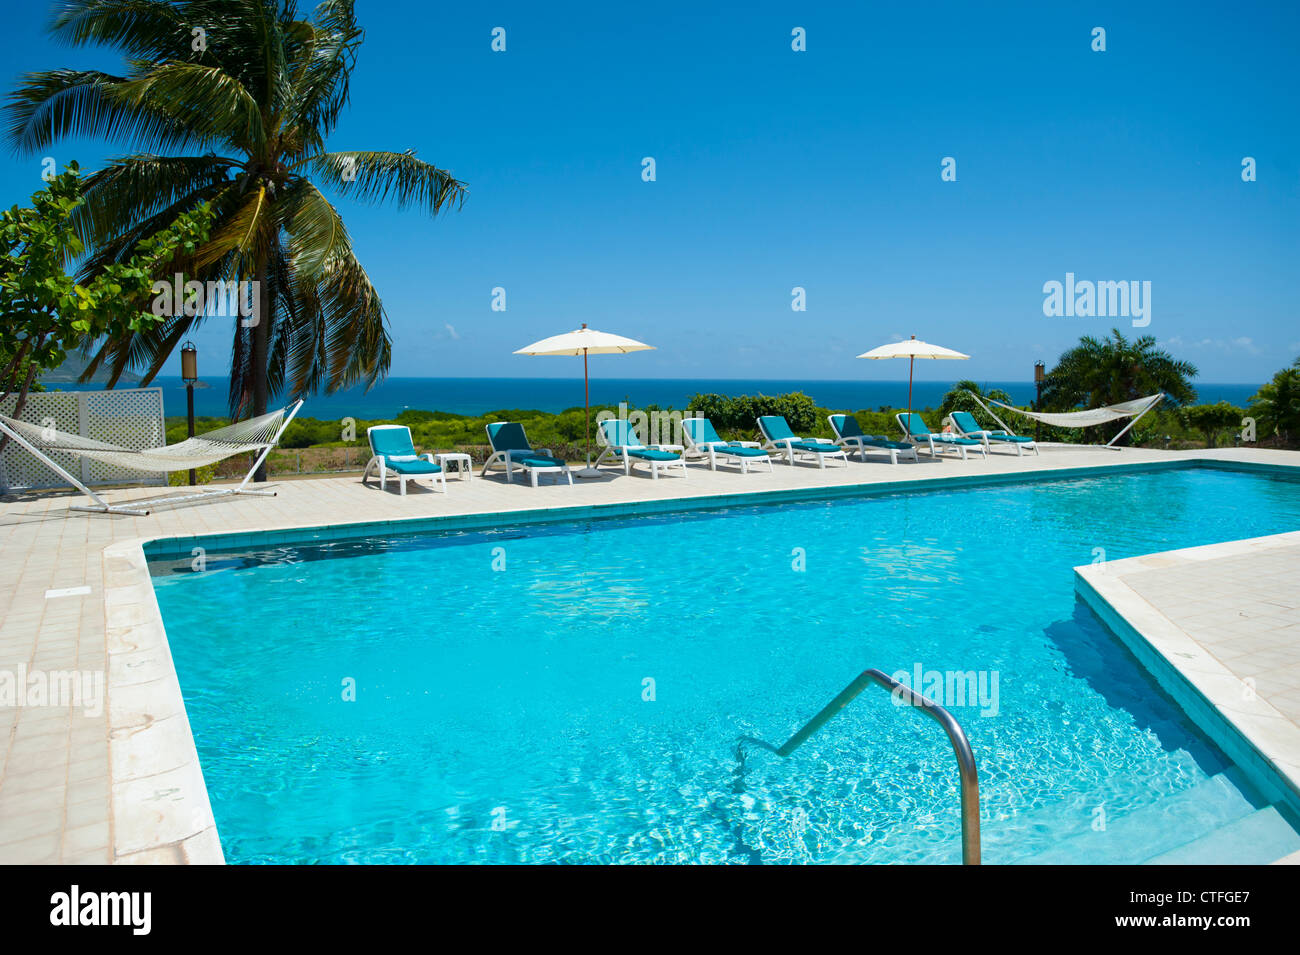 Caribbean West Indies Nevis Mount Nevis Hotel piscina tropicale a bordo piscina relax sedie Foto Stock